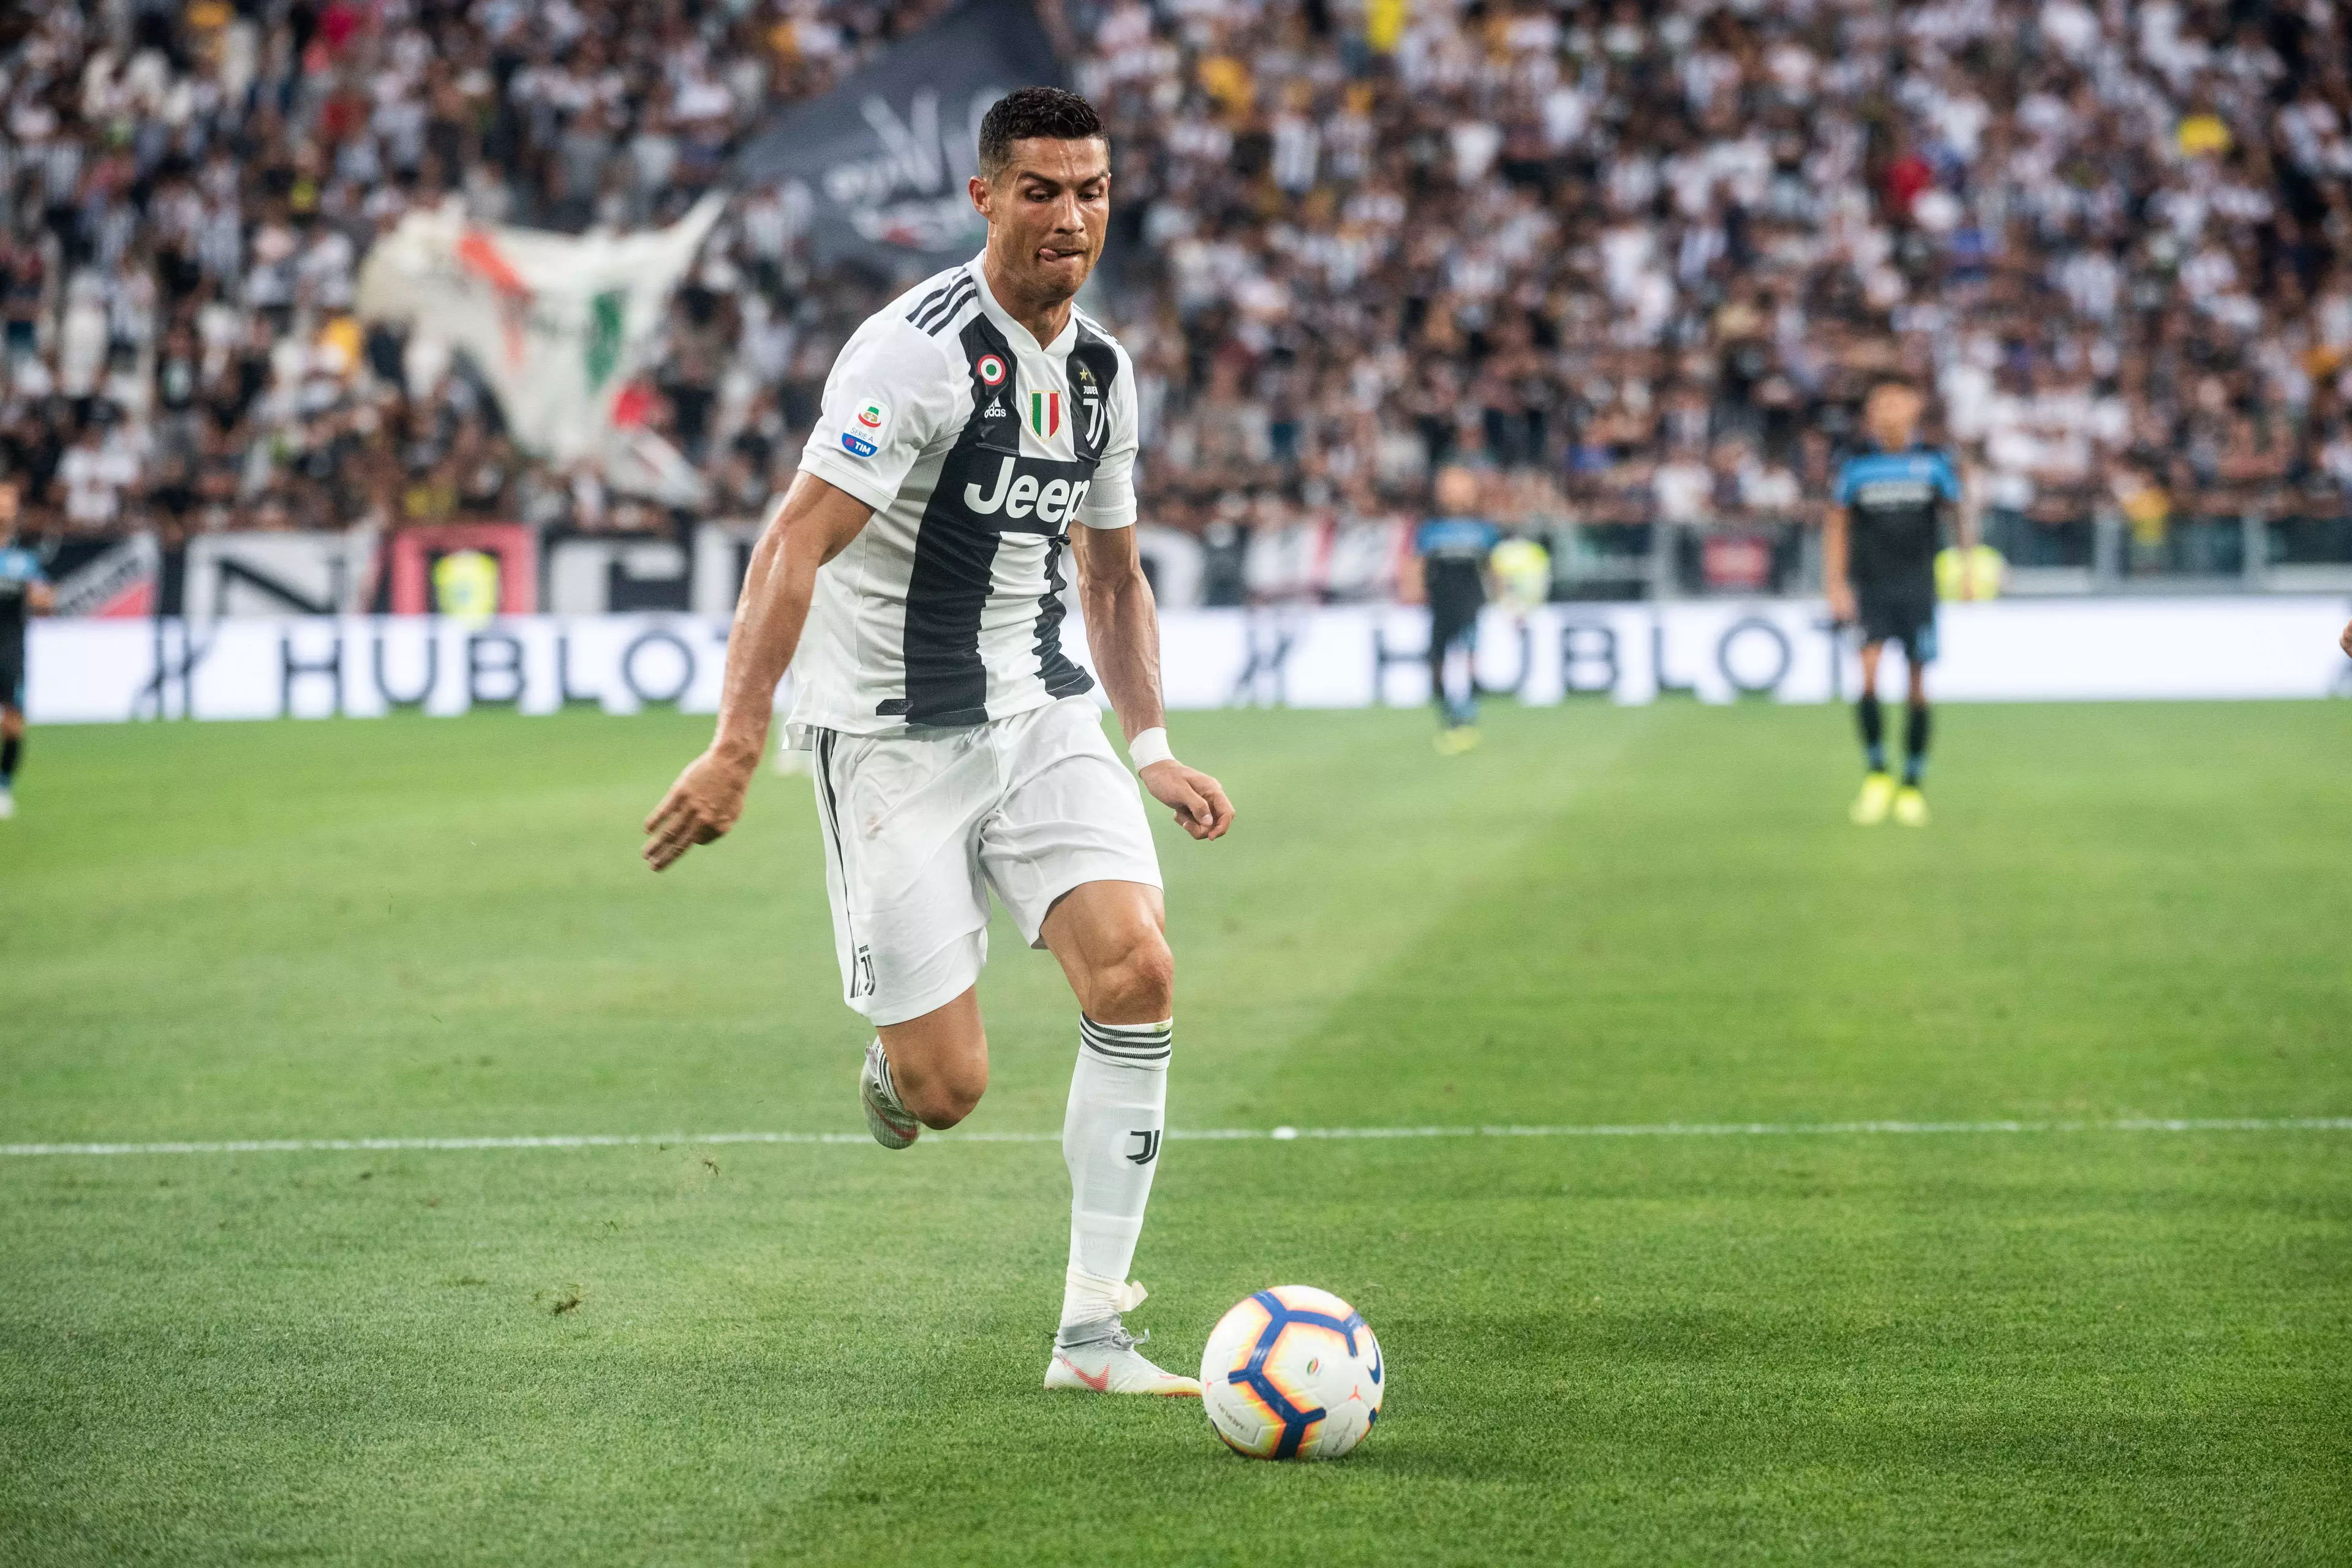 Ronaldo in action for Juventus. Image: PA